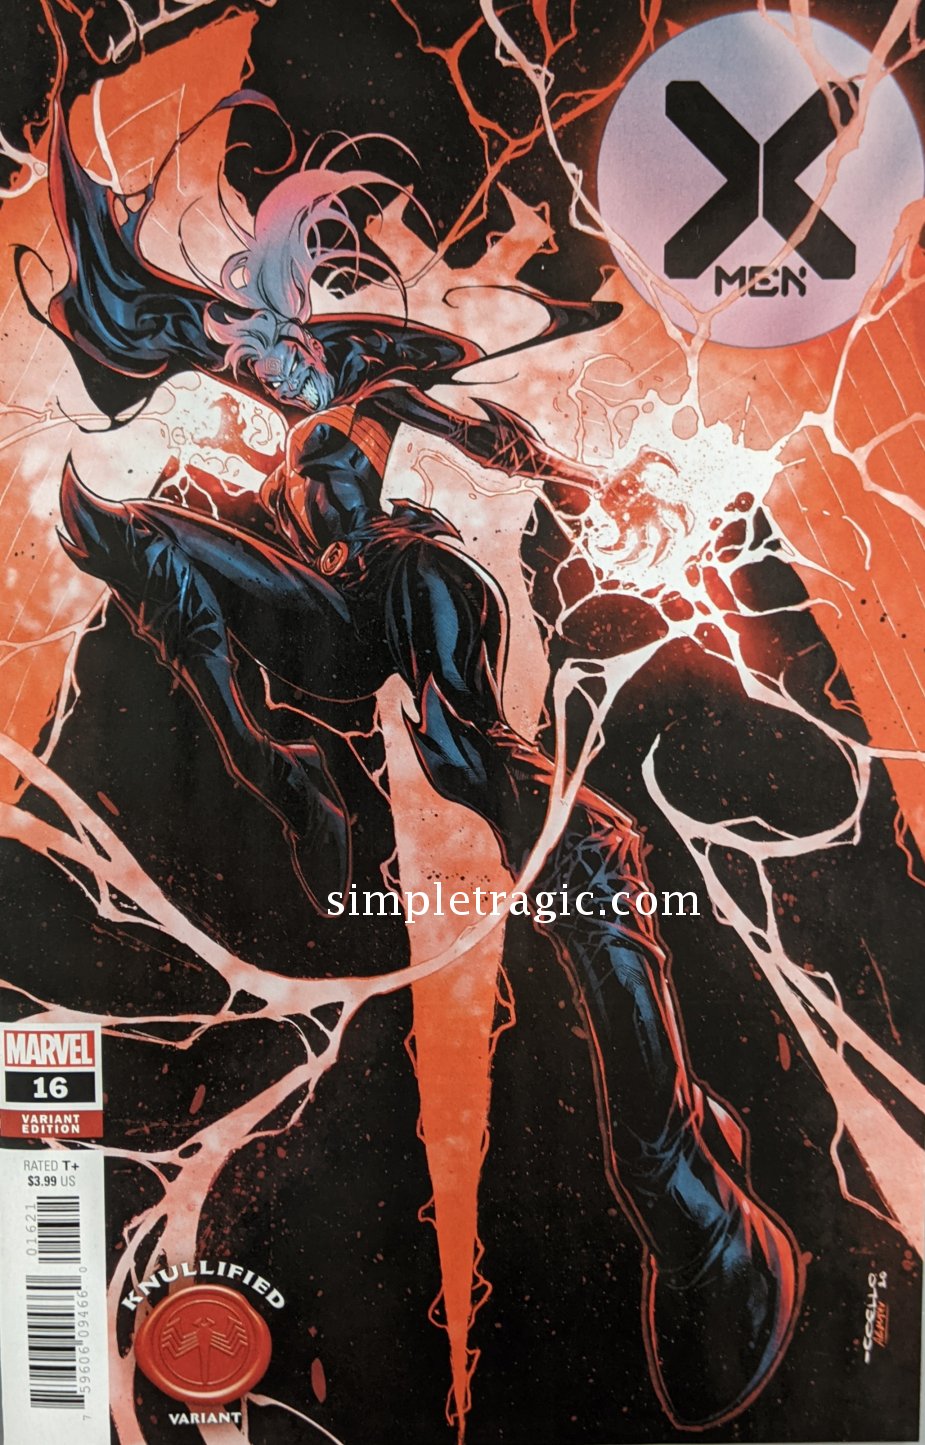 X-Men (2019) #16 (Knullified Variant)